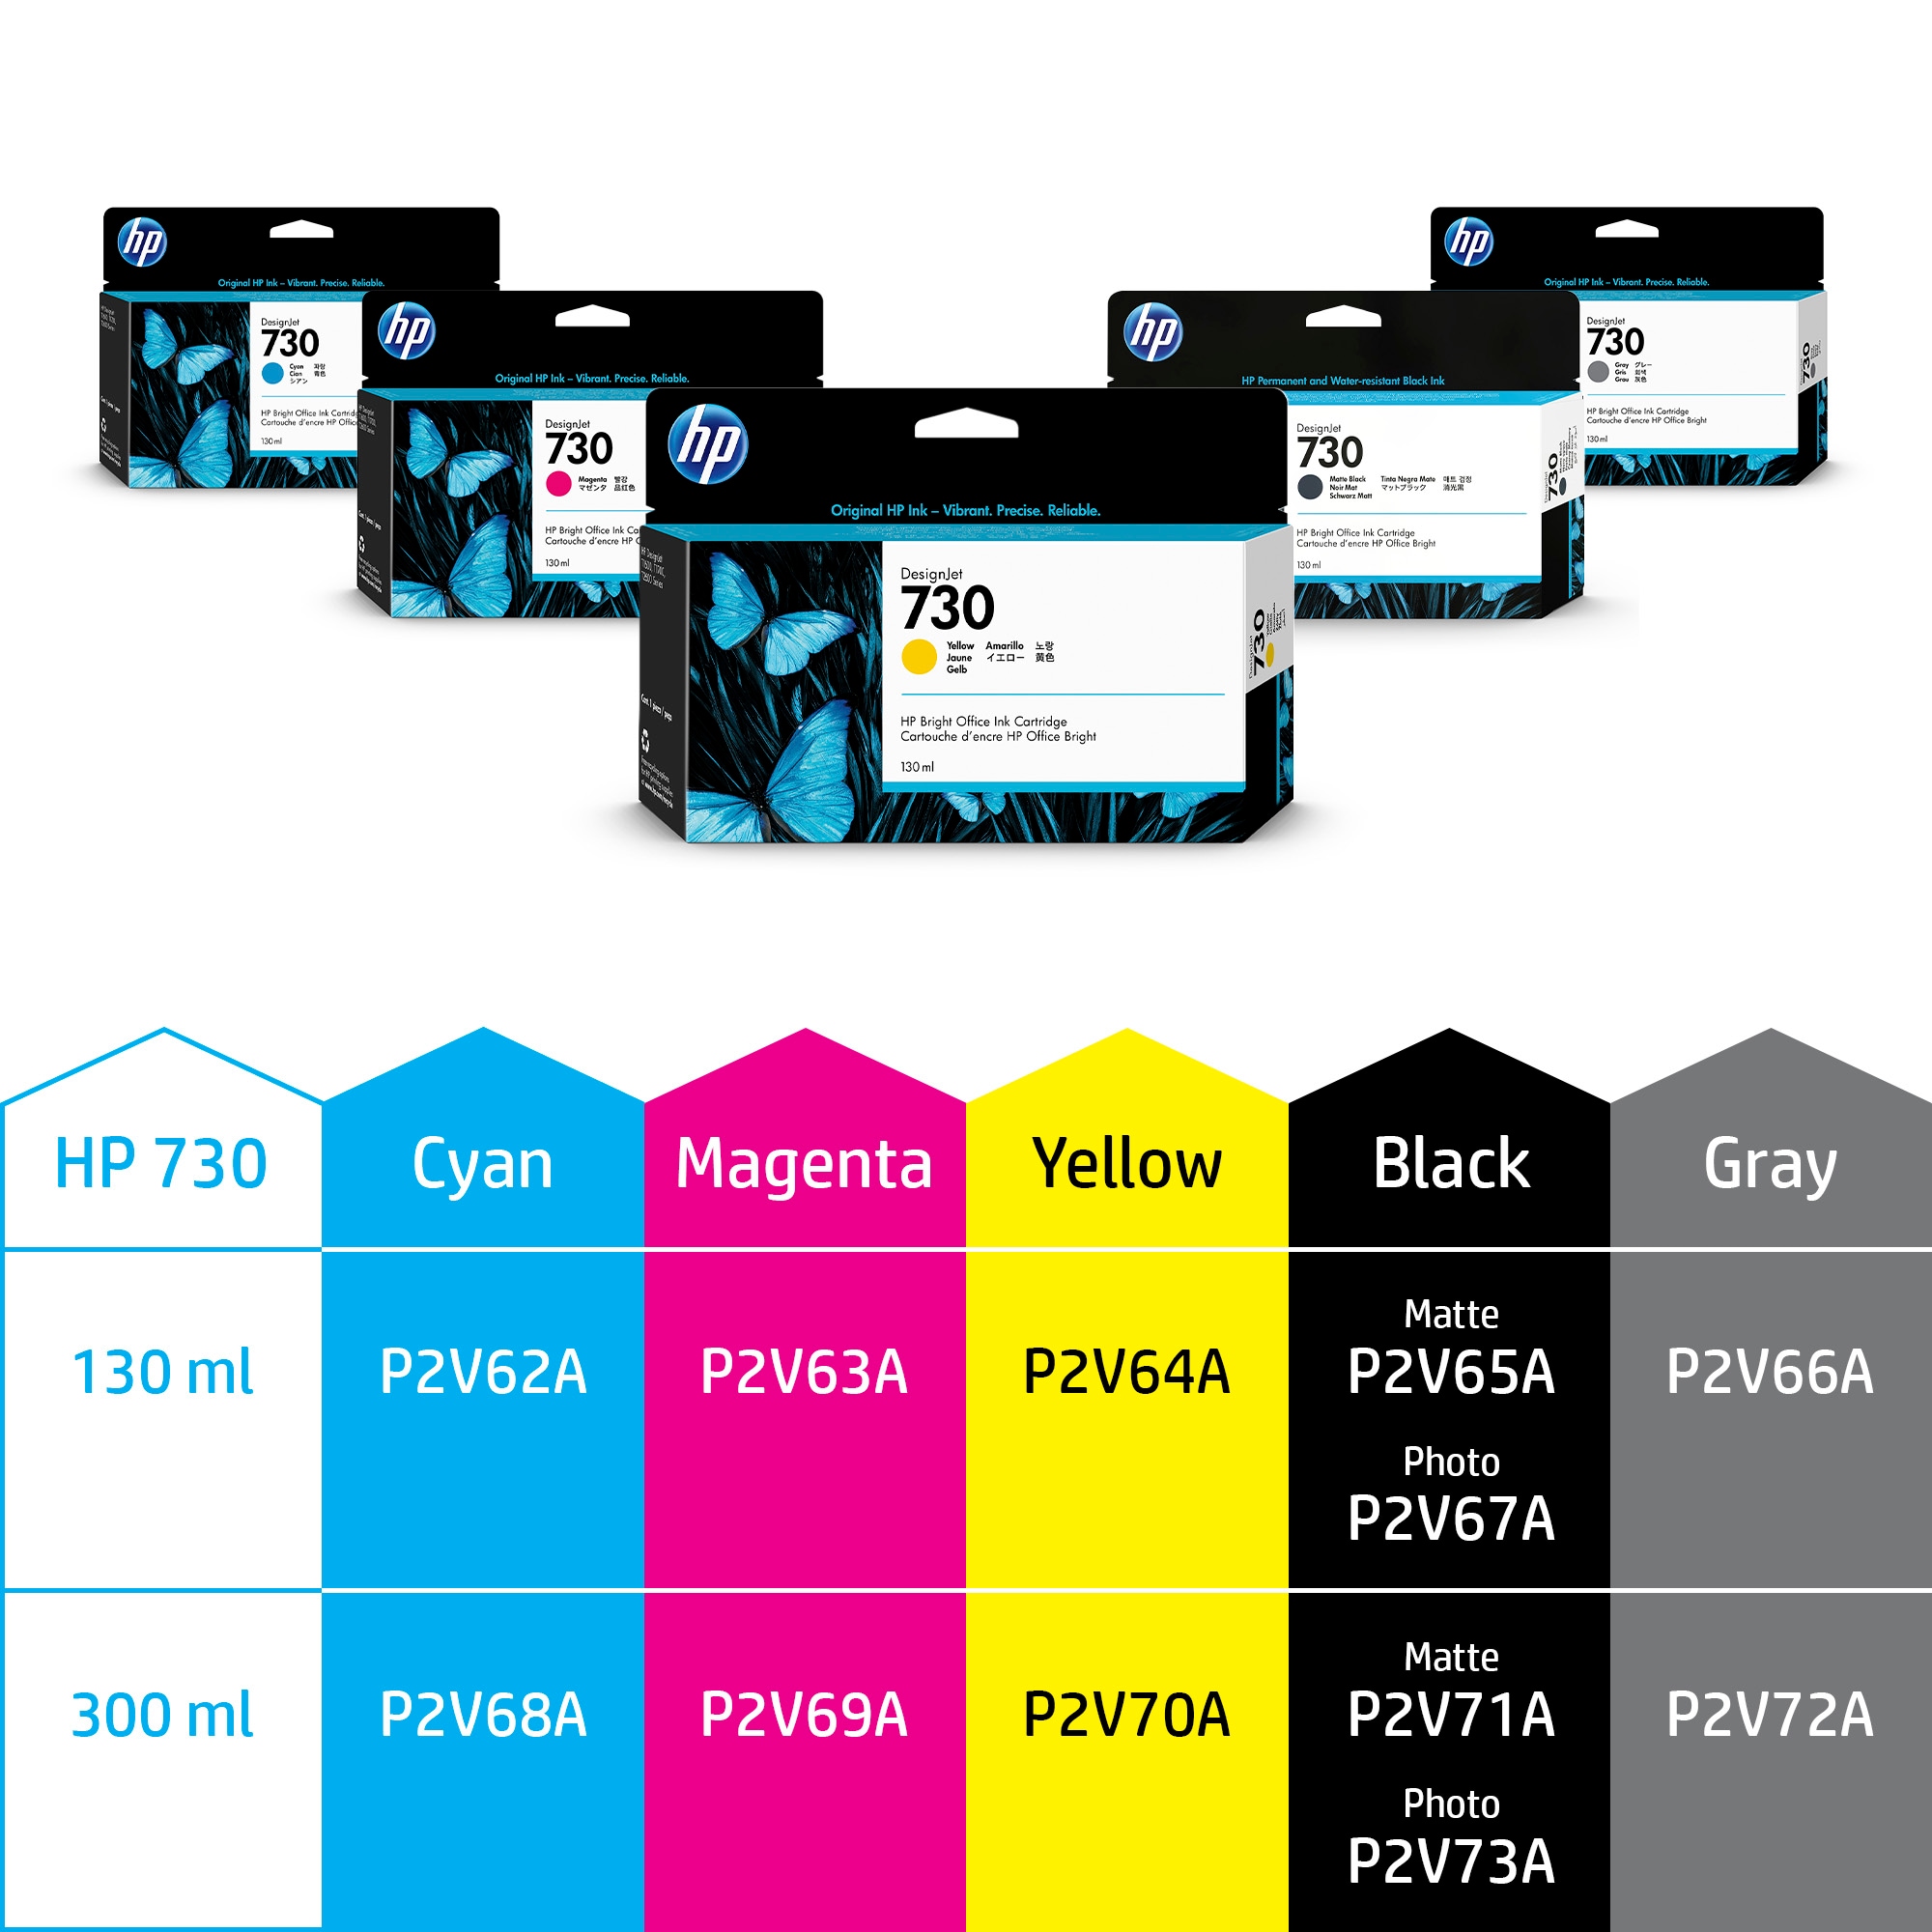 HP 730 1320-mL Cyan DesignJet Ink Cartridge (P2V62A) - image 2 of 3